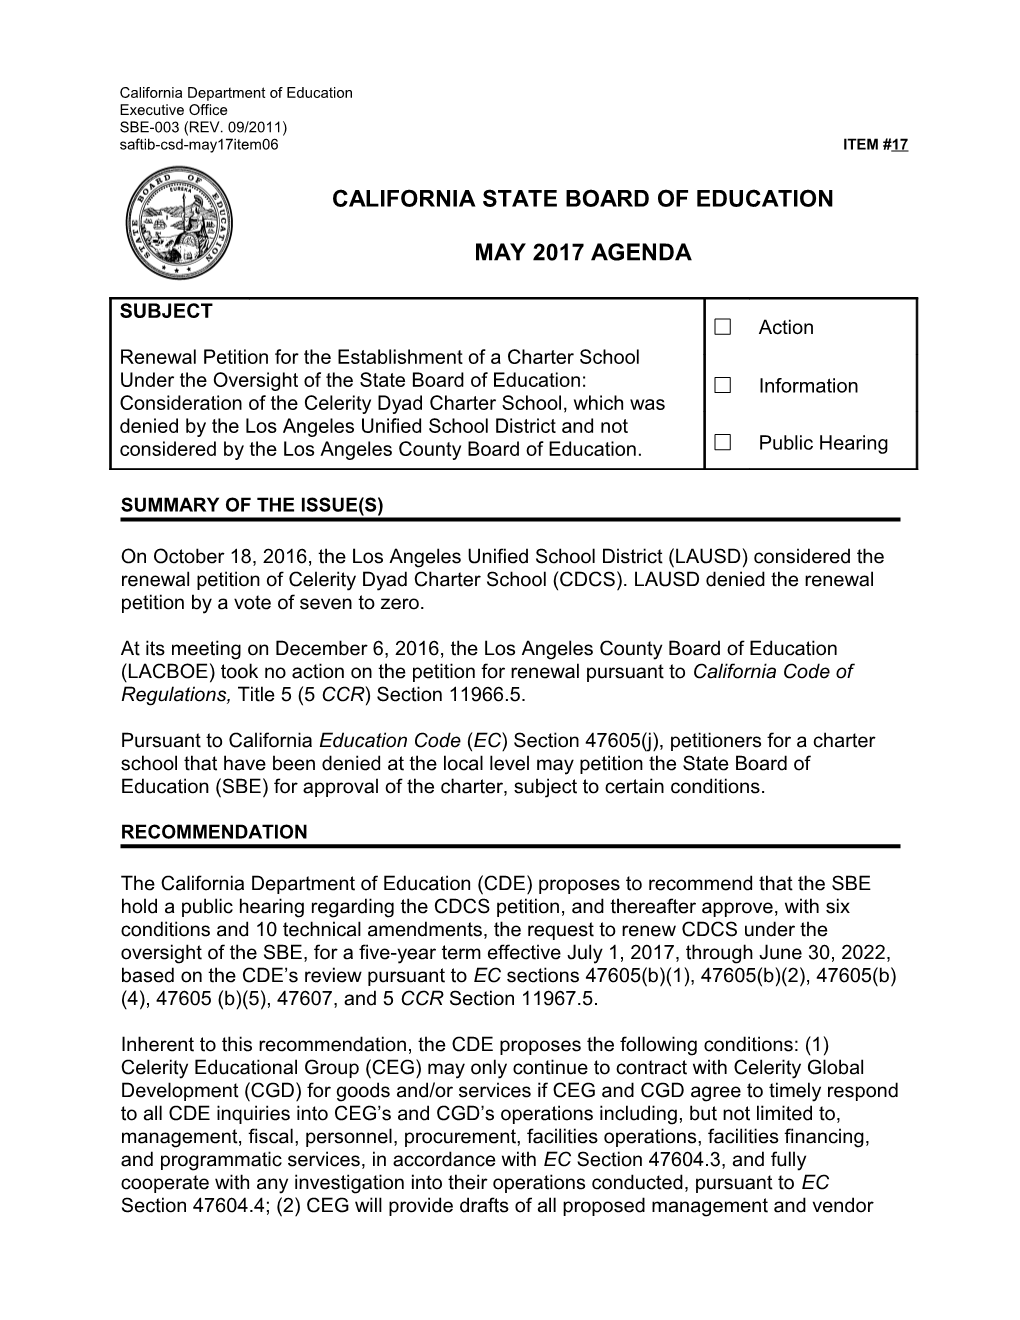 May 2017 Agenda Item 17 - Meeting Agendas (CA State Board of Education)